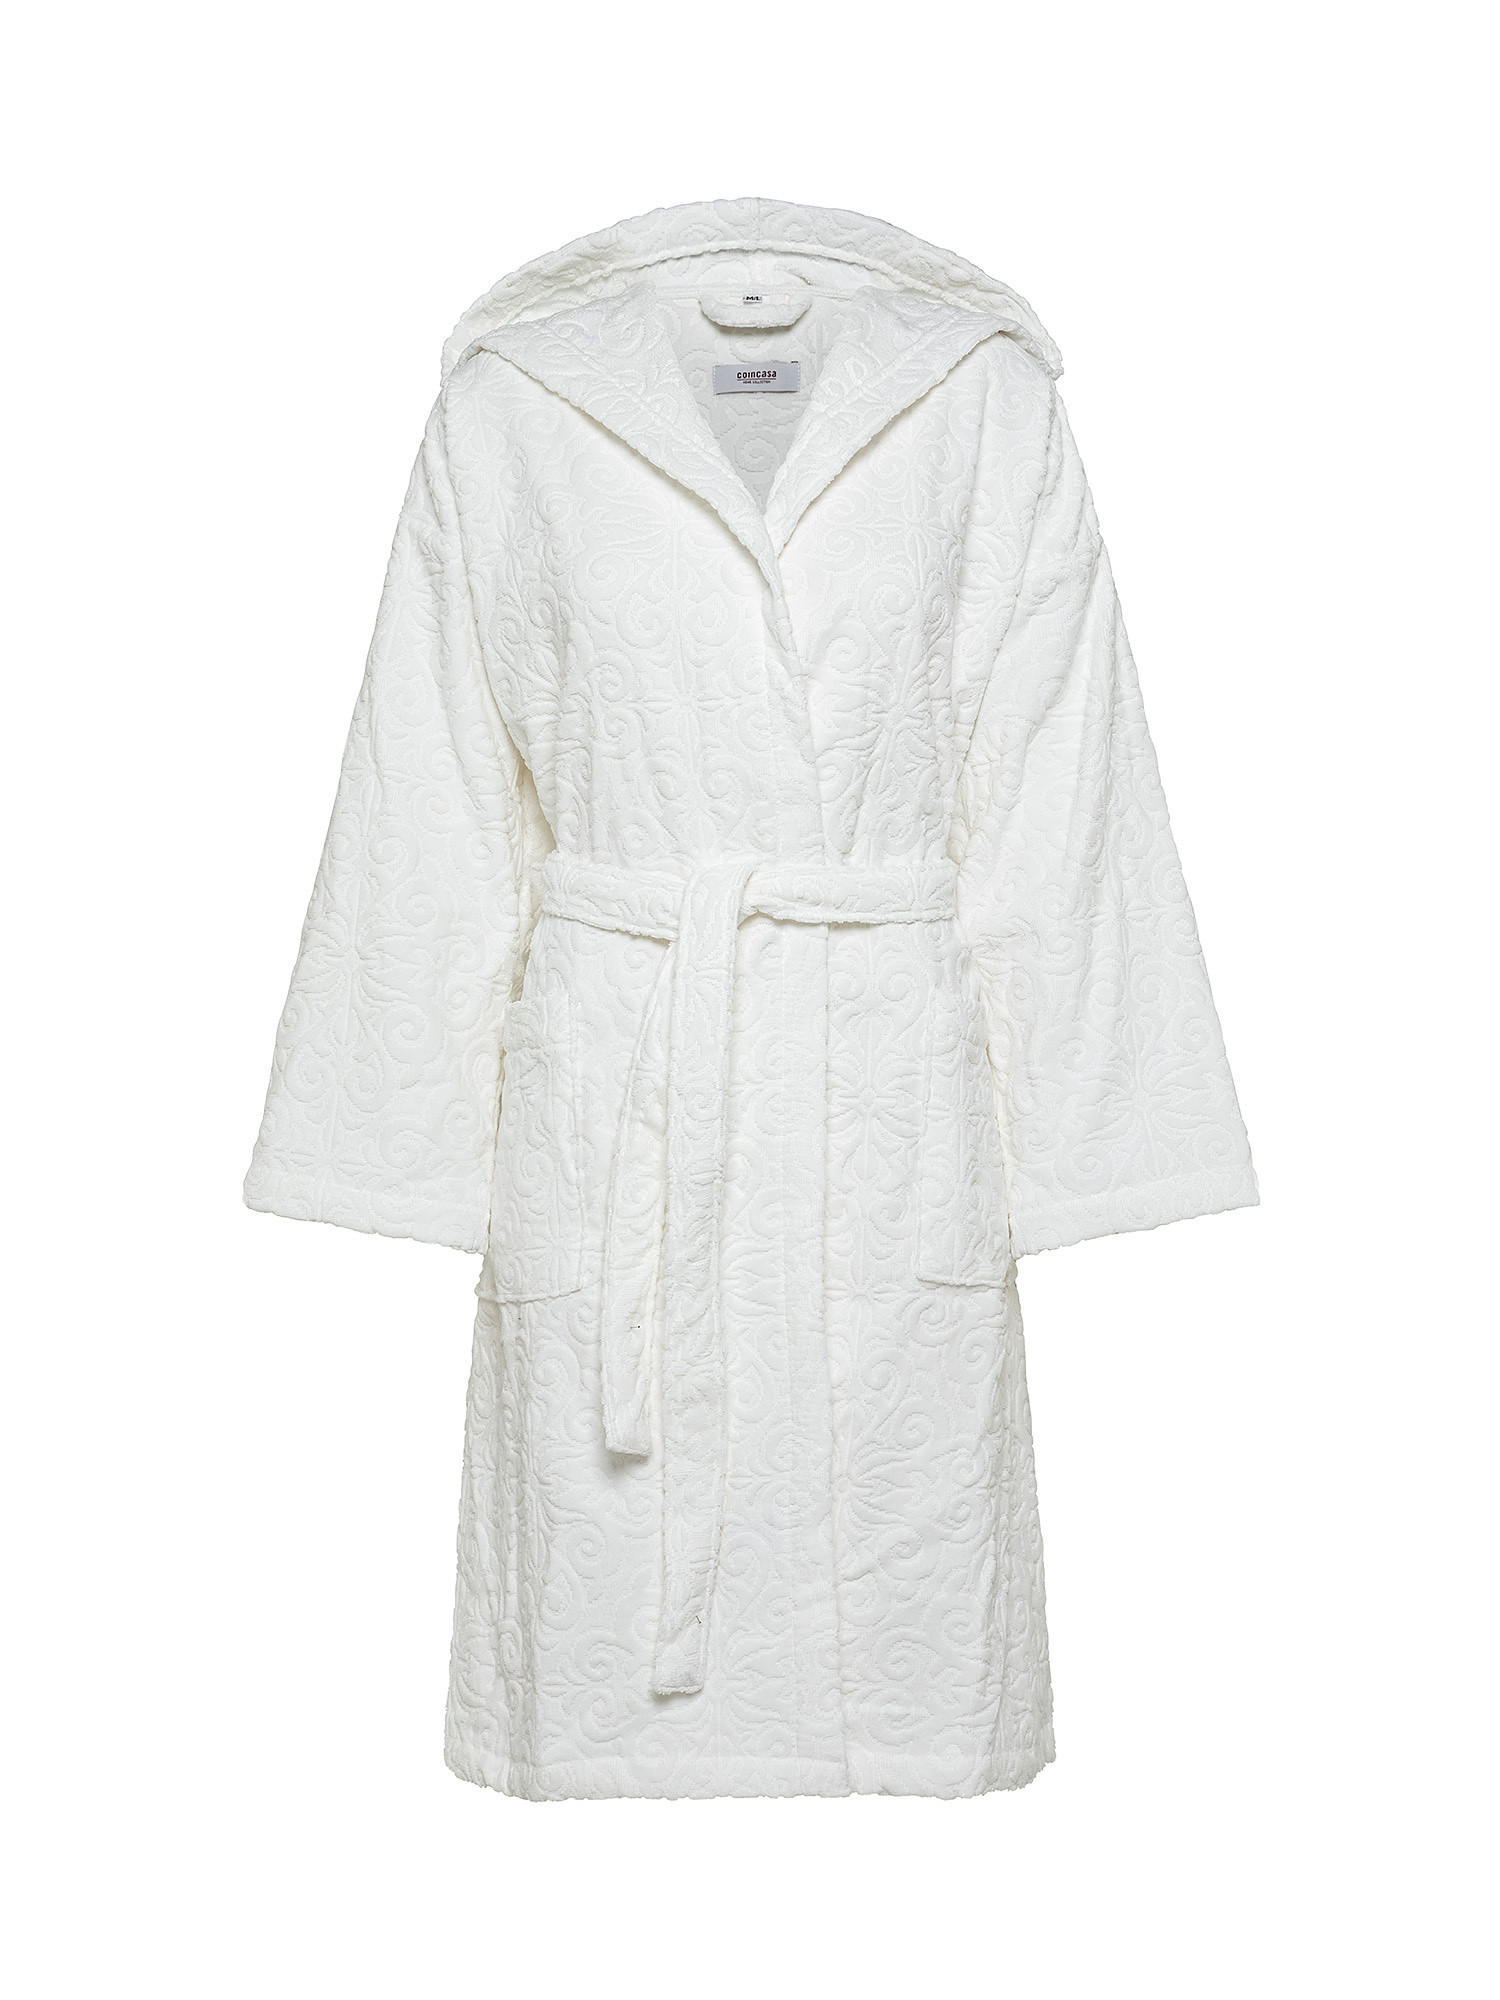 Cotton velor bathrobe with azulejos motif, White, large image number 0